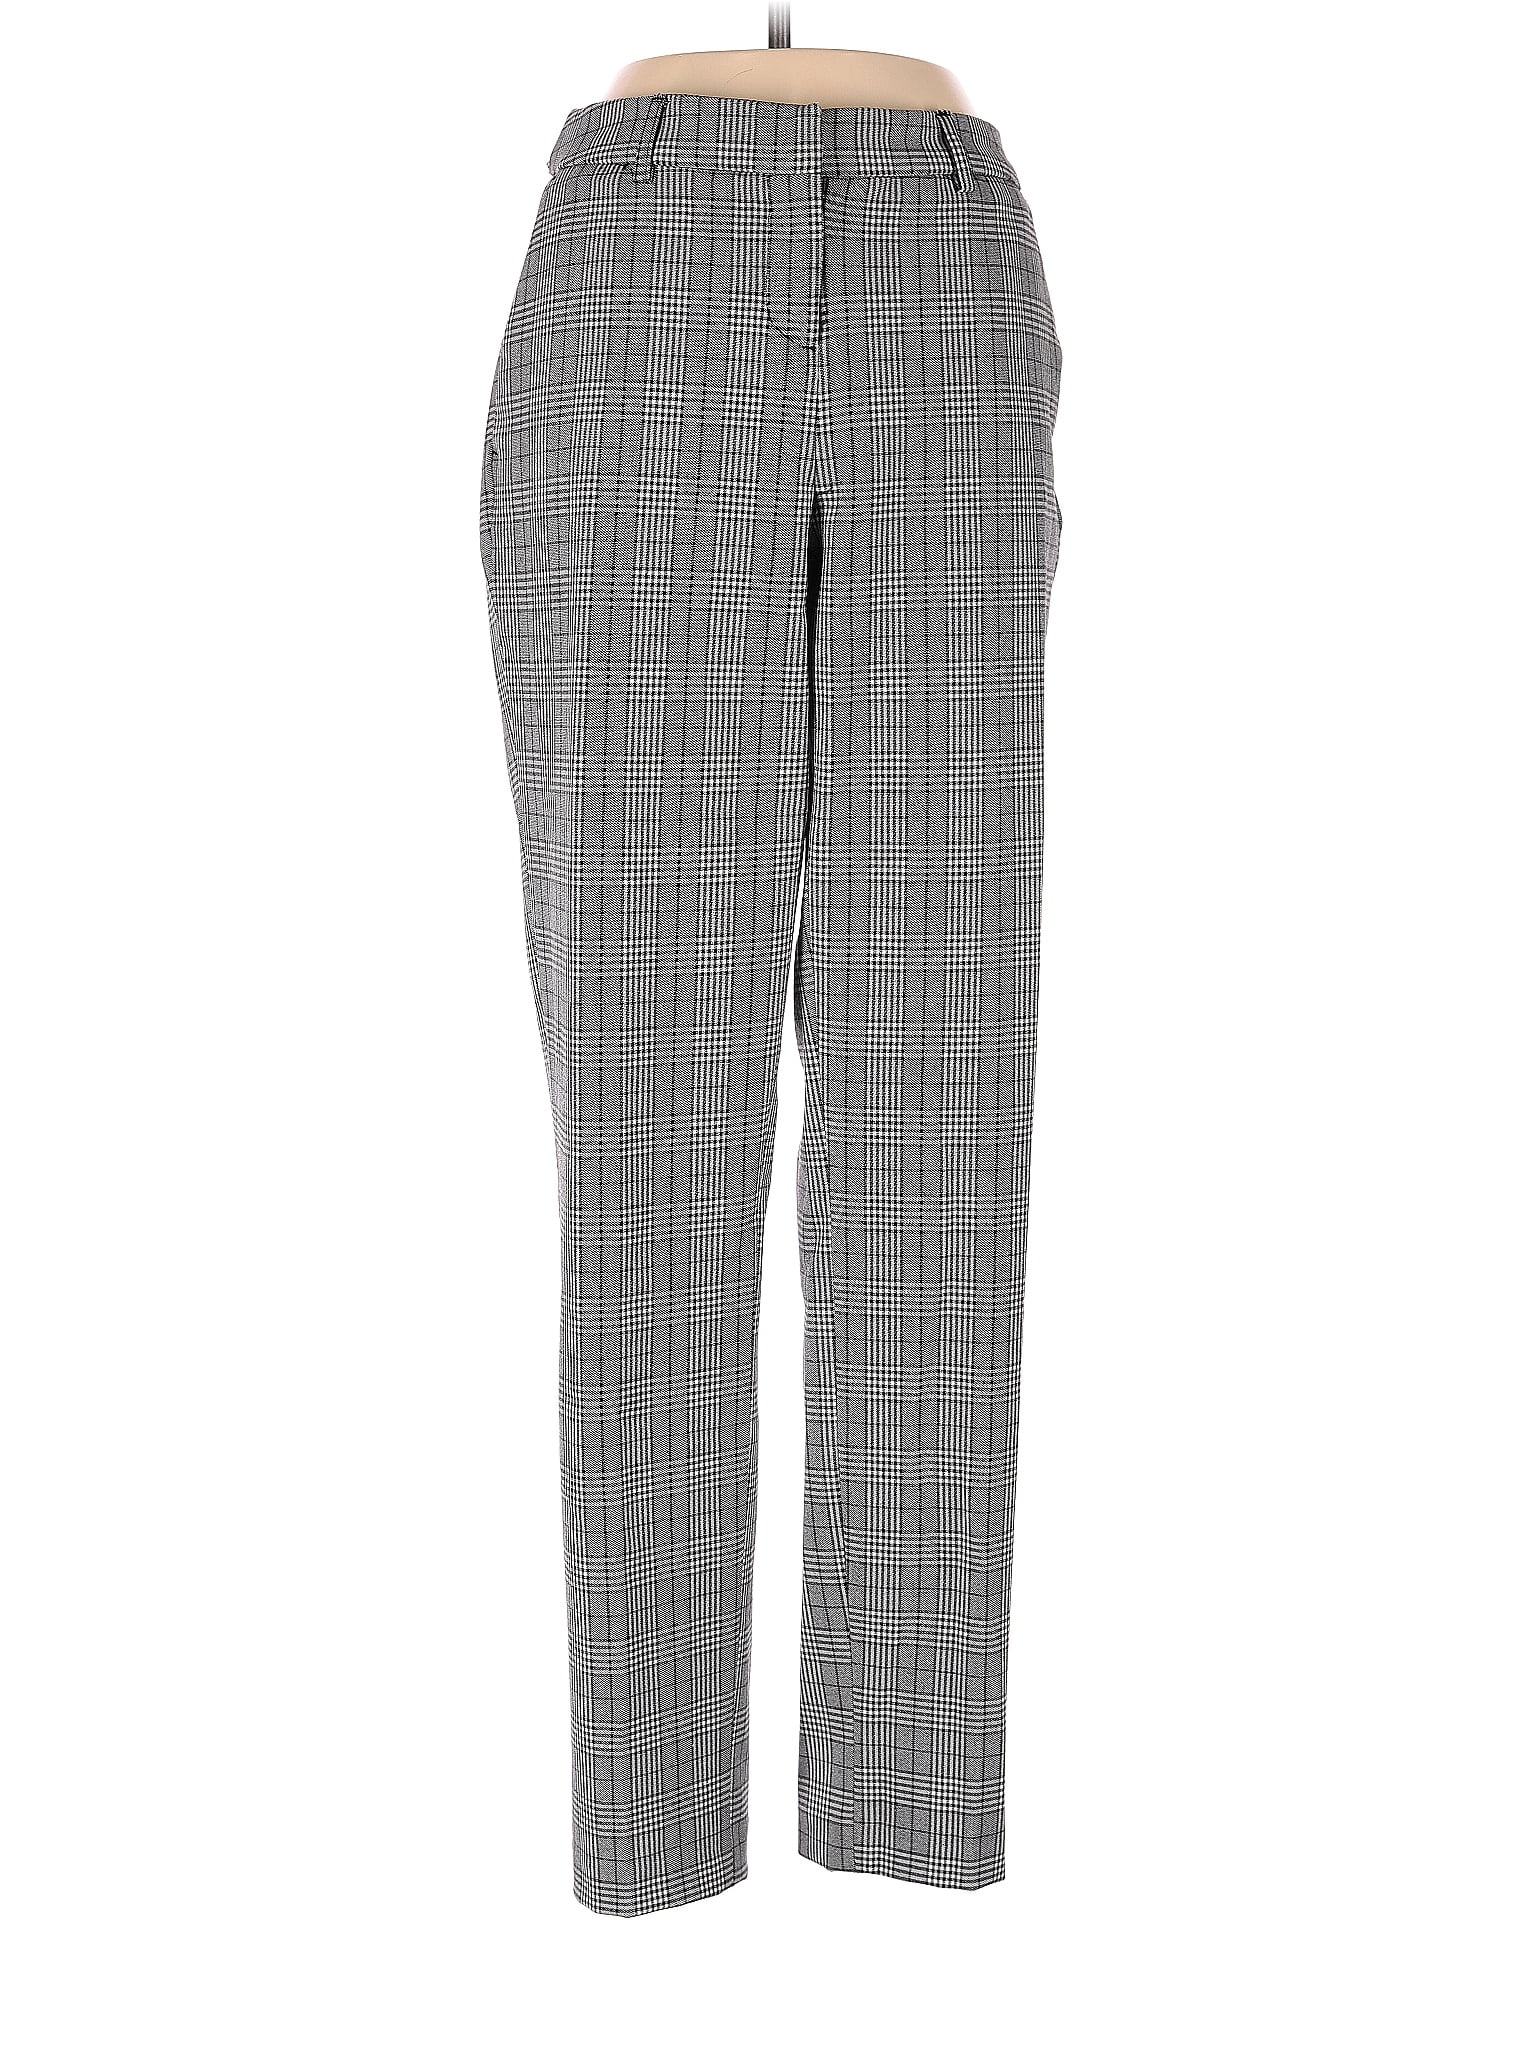 Adrienne Vittadini Plaid Multi Color Gray Dress Pants Size 10 - 82